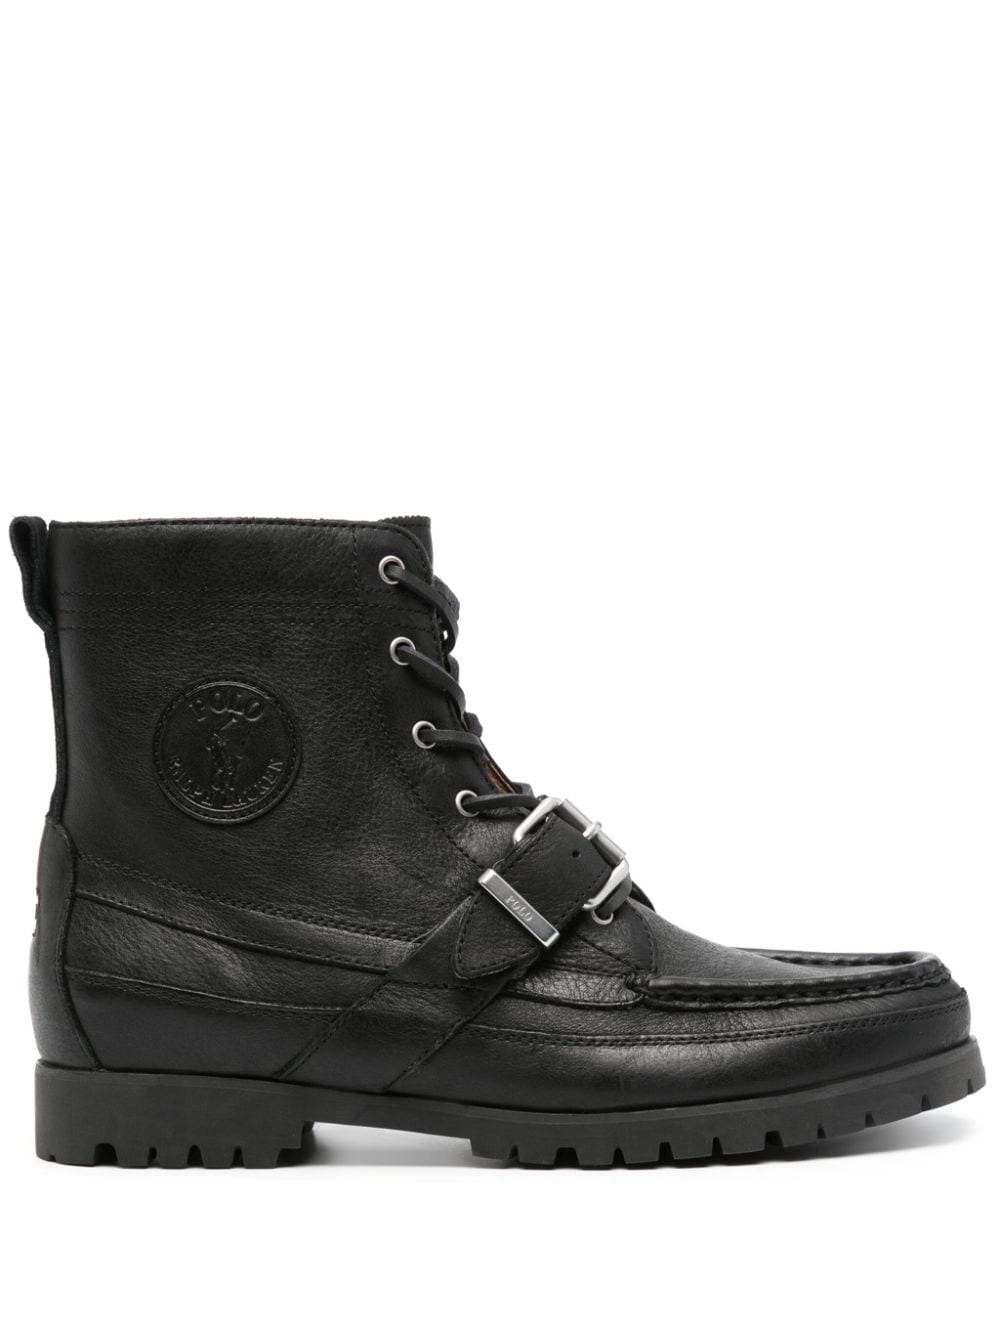 Polo Ralph Lauren Ranger leather boots - Black von Polo Ralph Lauren